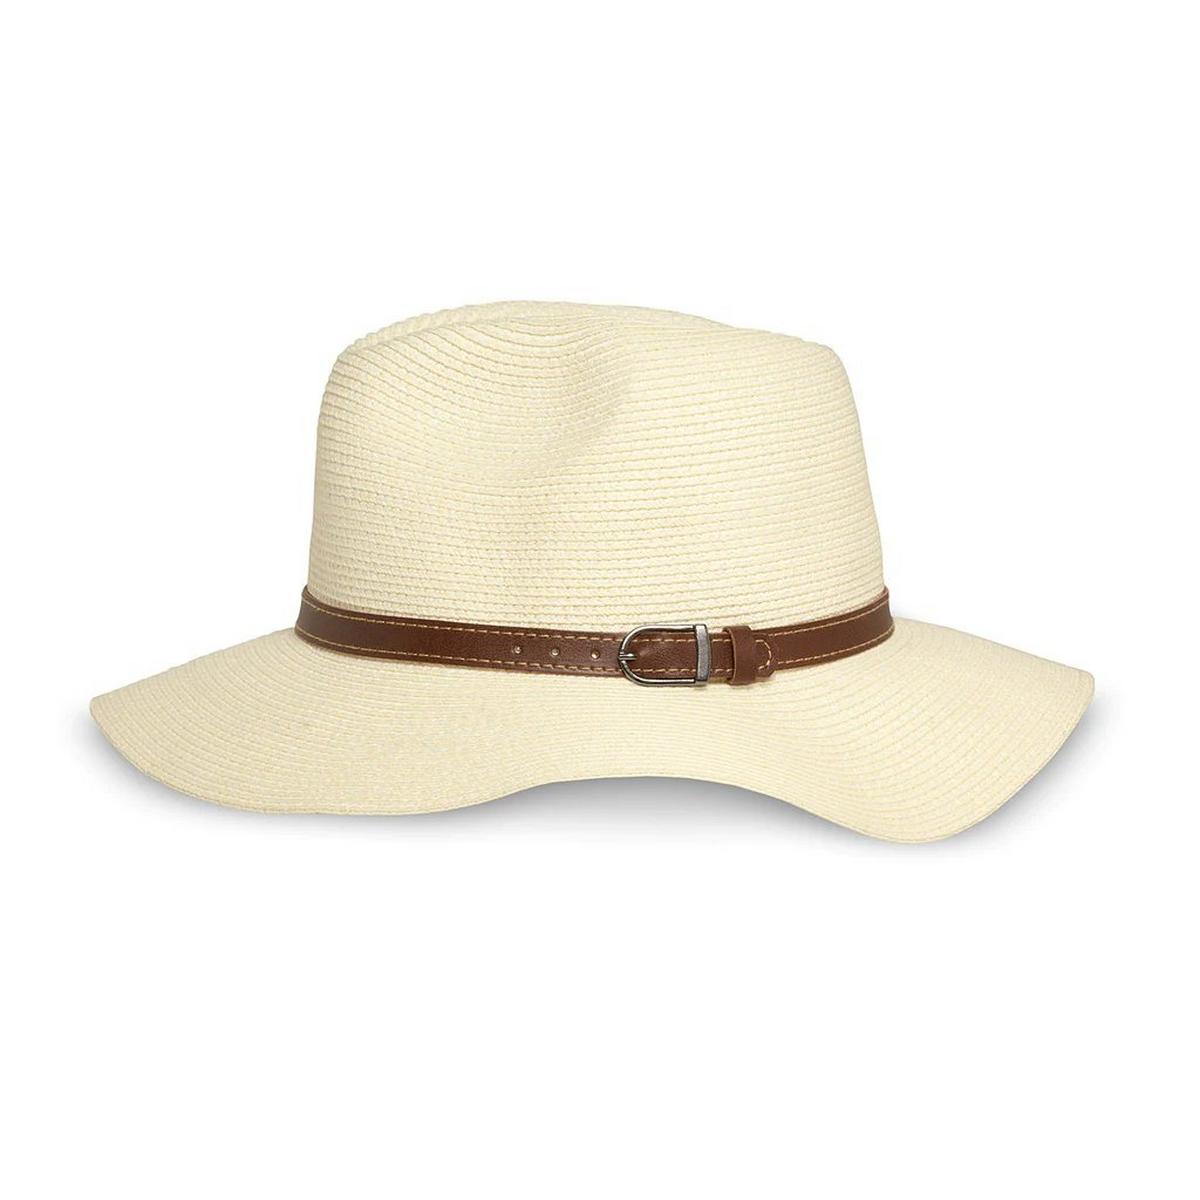 Sunday Afternoon Women's Coronado Hat - Cream/Tweed